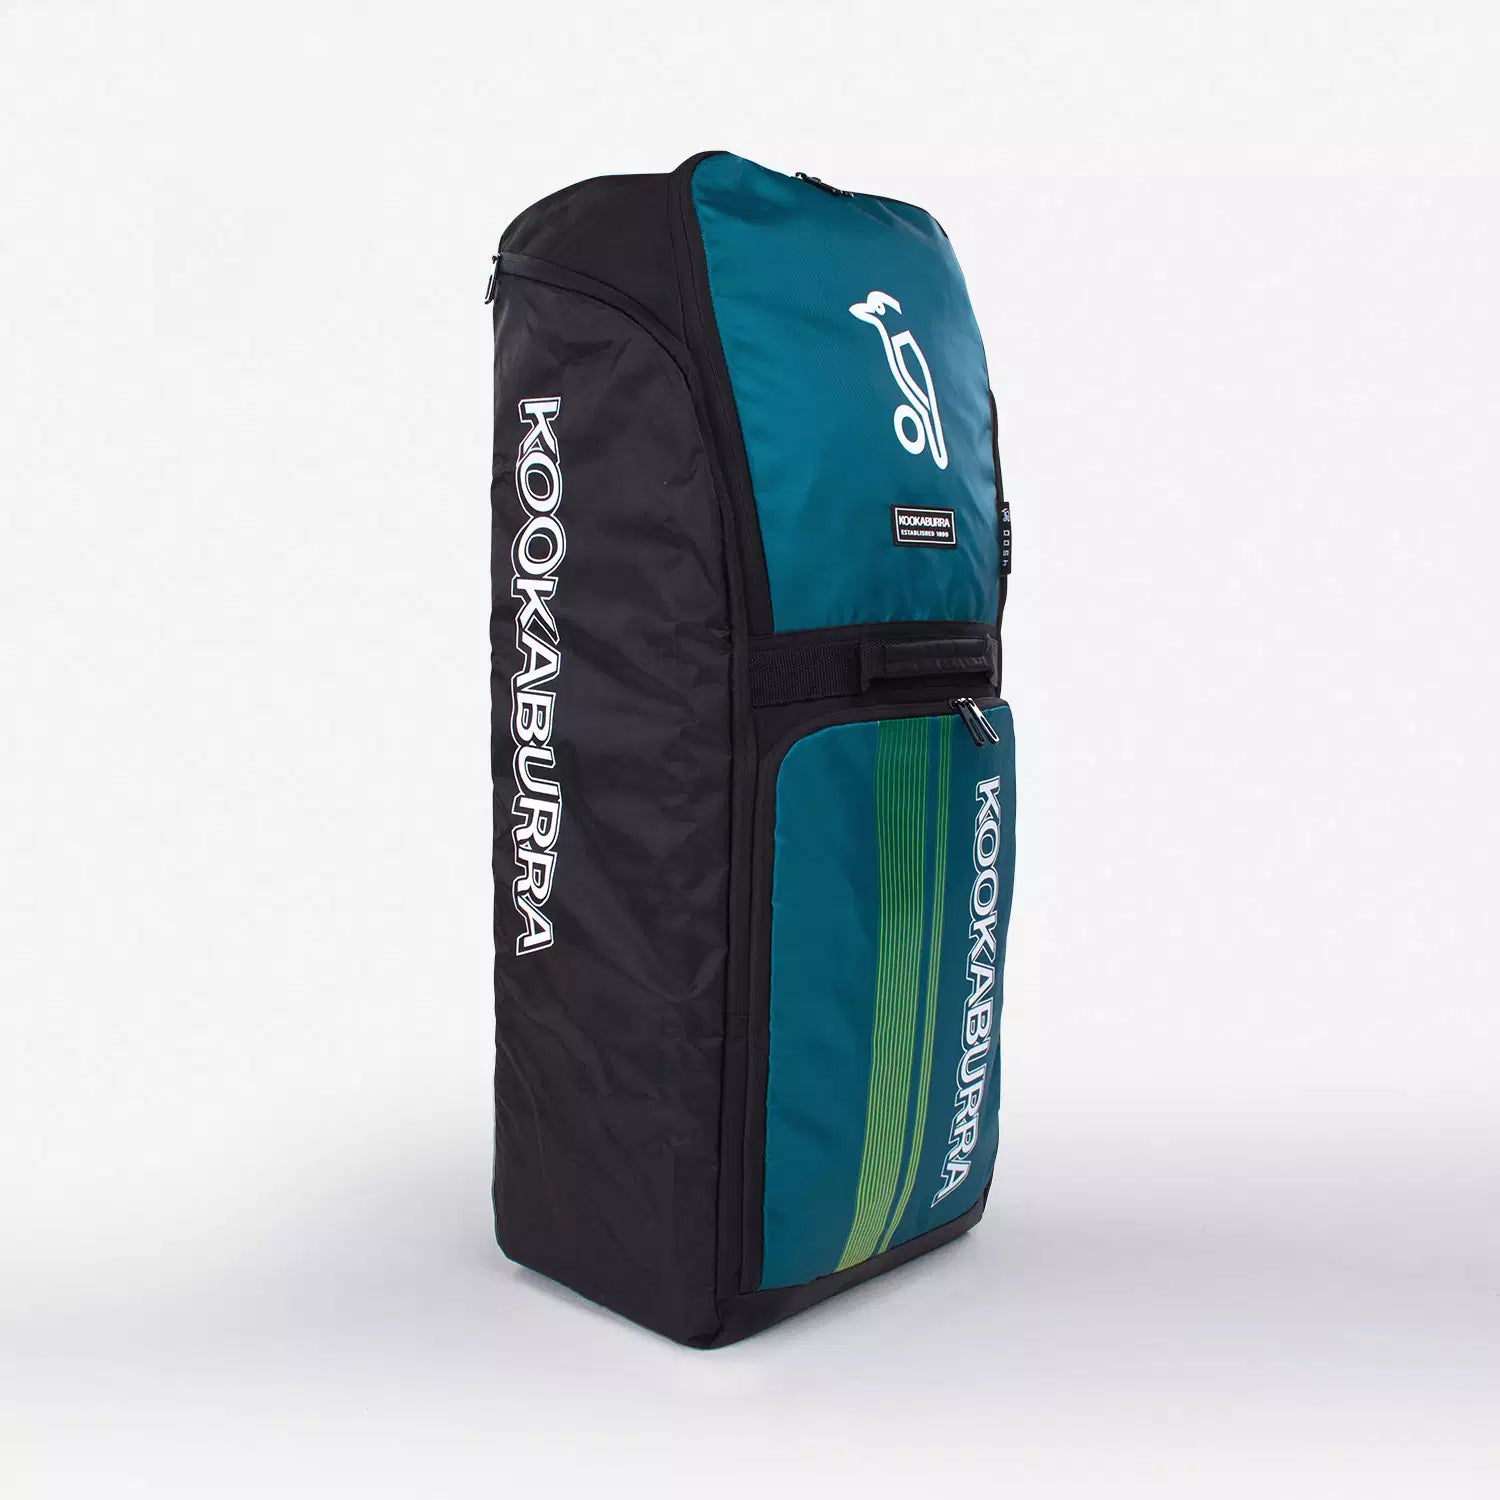 Kookaburra Cricket d4500 Duffle Bag